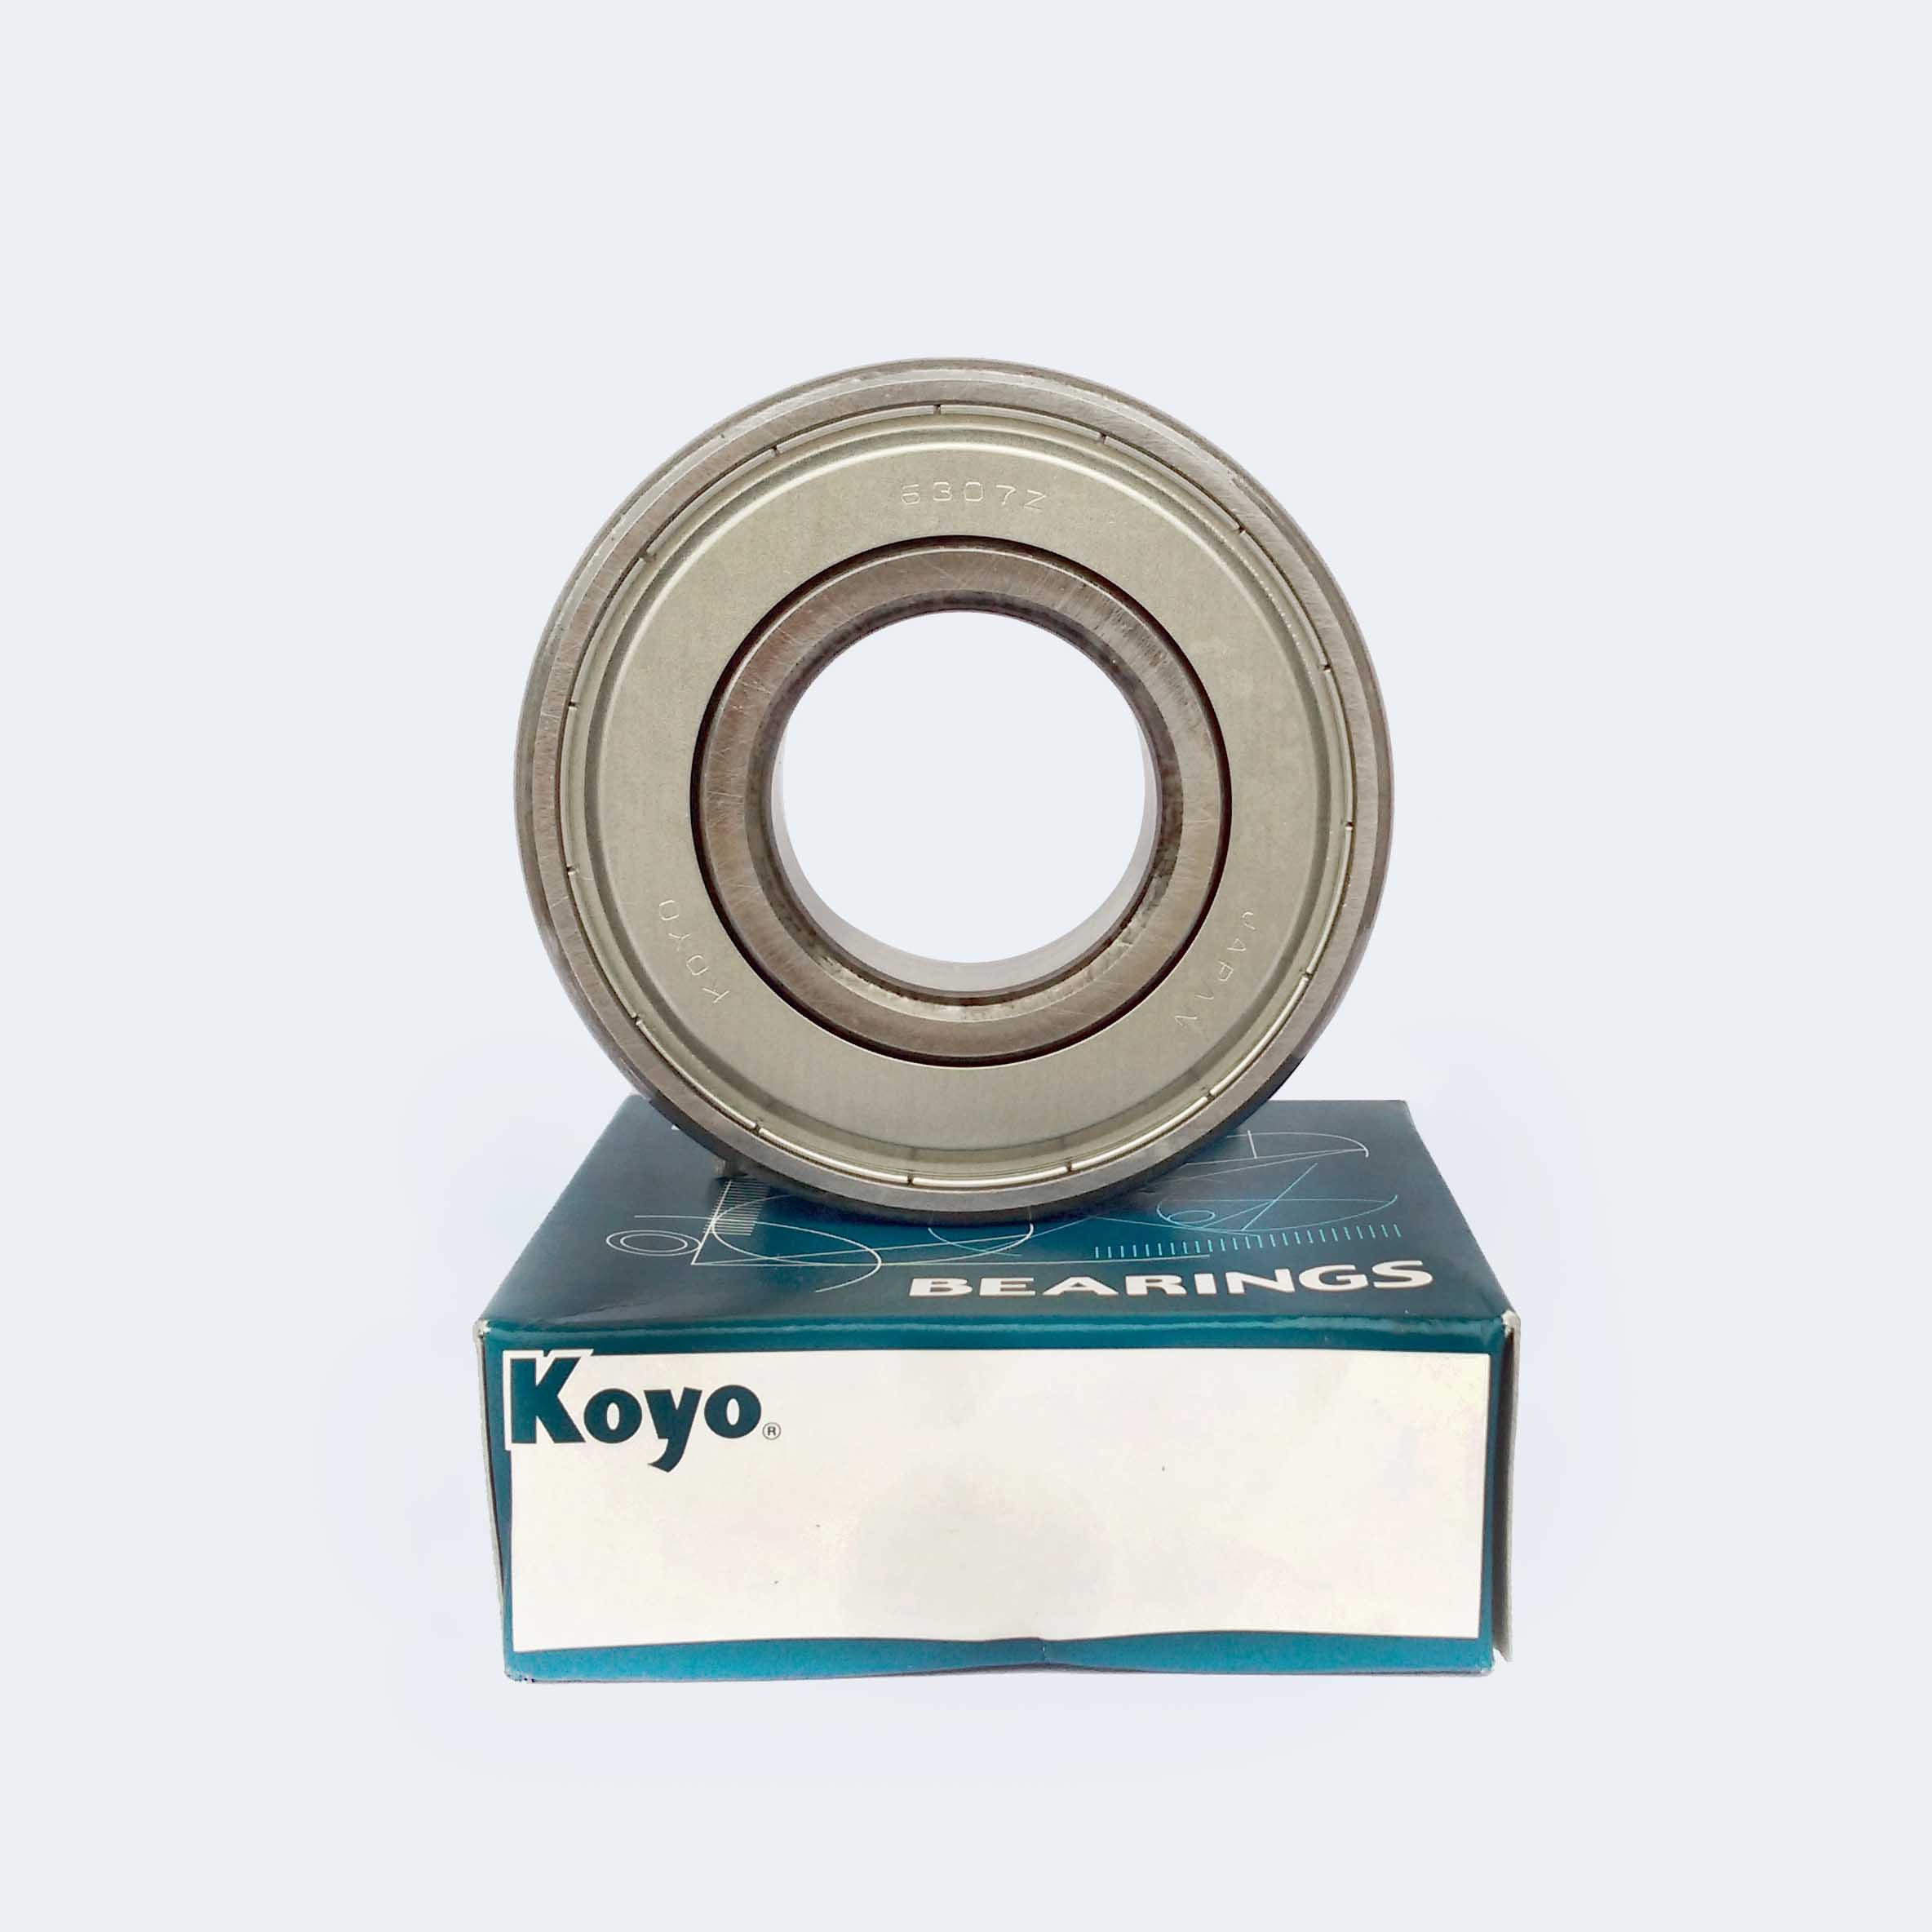 KOYO進口軸承廠家,RCB-121616滾針軸承,日本品牌軸承價格